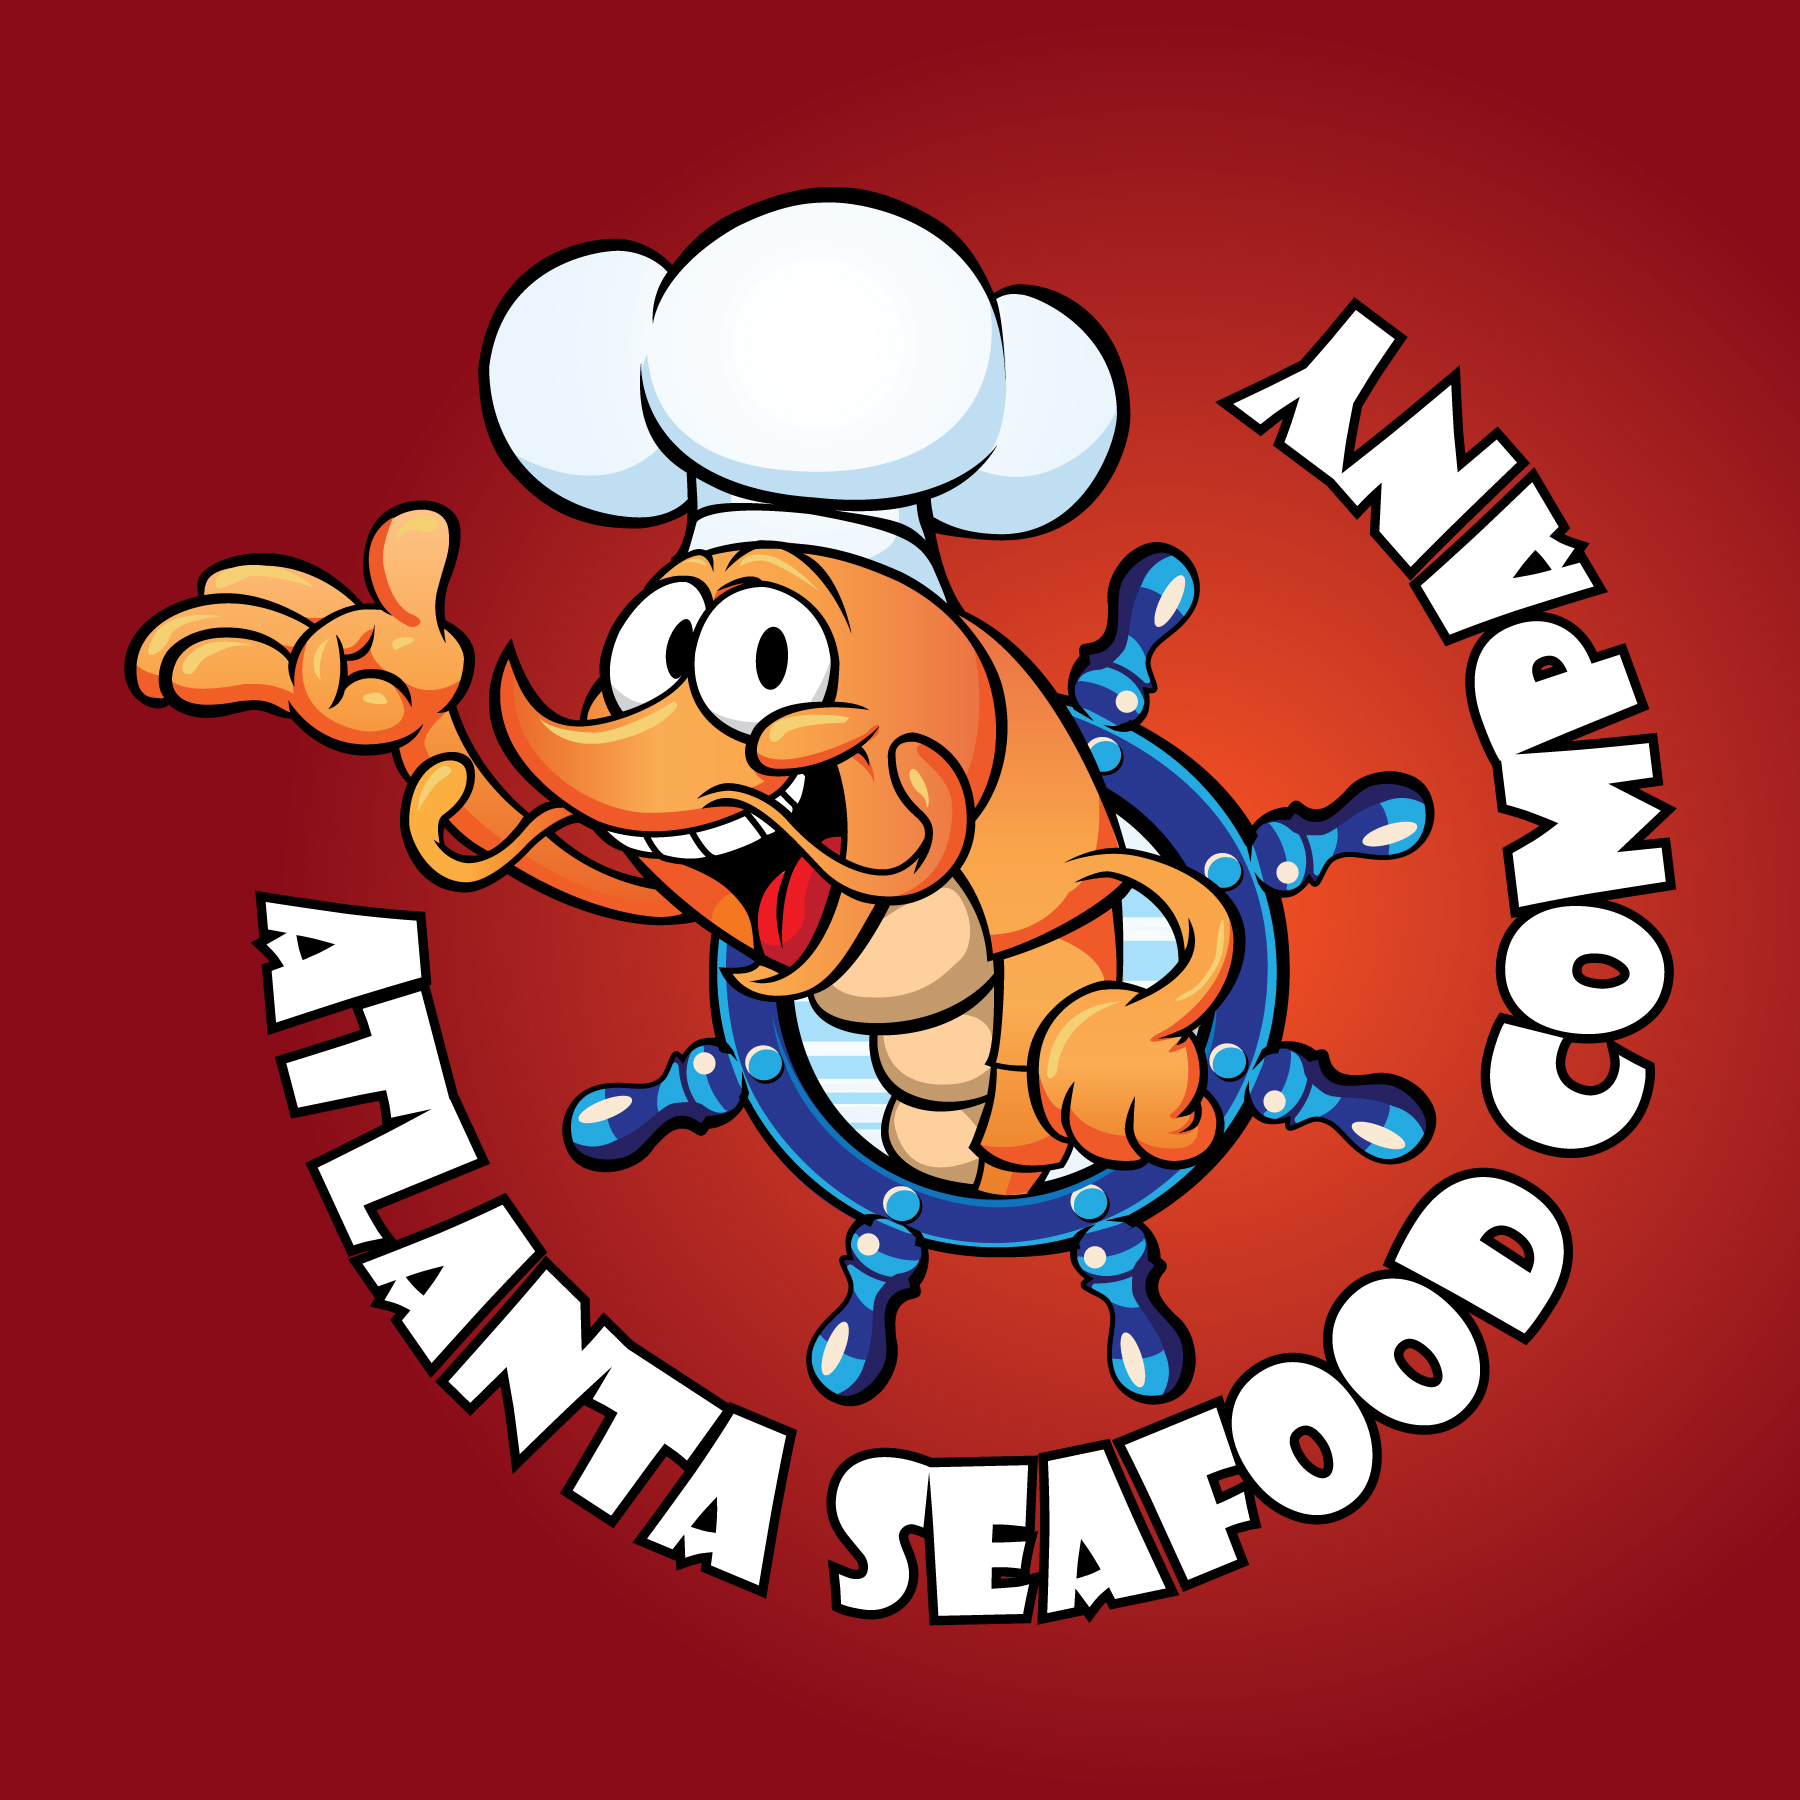 atl seafood company